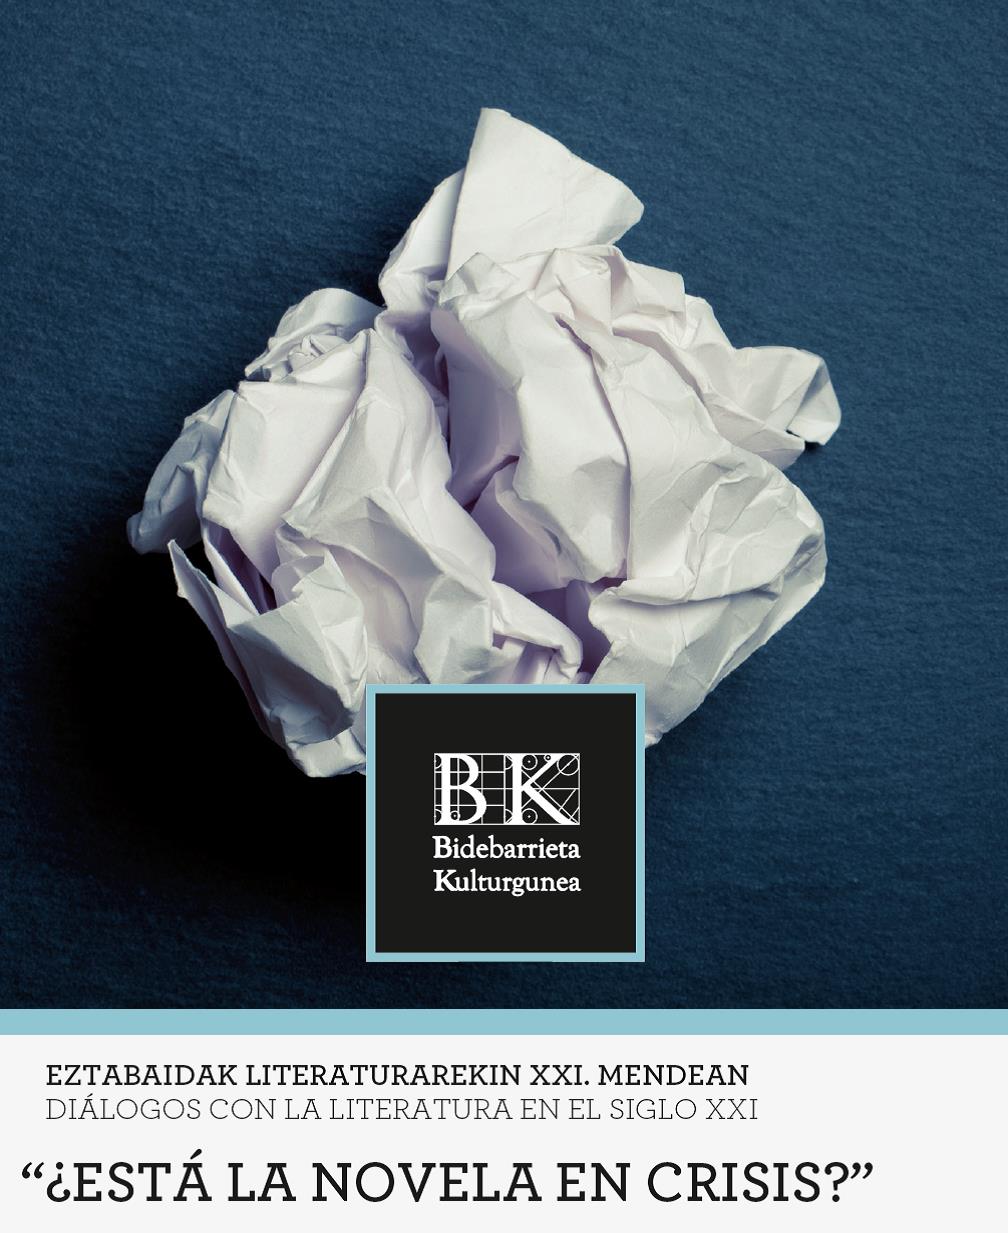 Los “DIÁLOGOS CON LA LITERATURA” de Bidebarrieta Kulturgunea reunirán el 21 de noviembre a Elvira Navarro e Iban Zaldua, en una charla sobre el estado actual de la novela